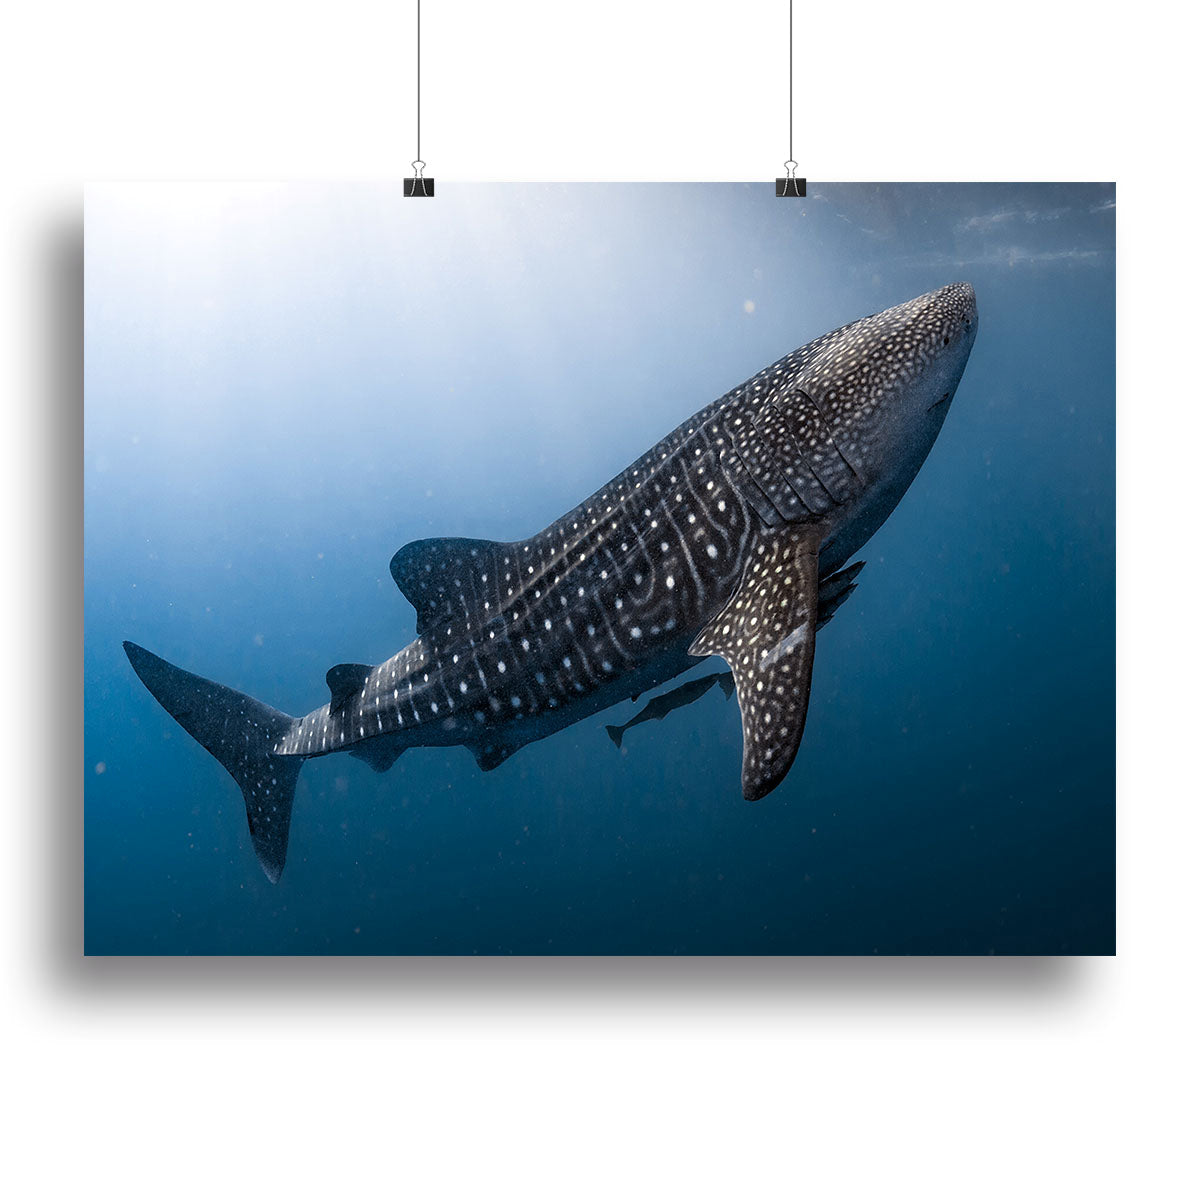 Whale Shark very near Canvas Print or Poster - Canvas Art Rocks - 2